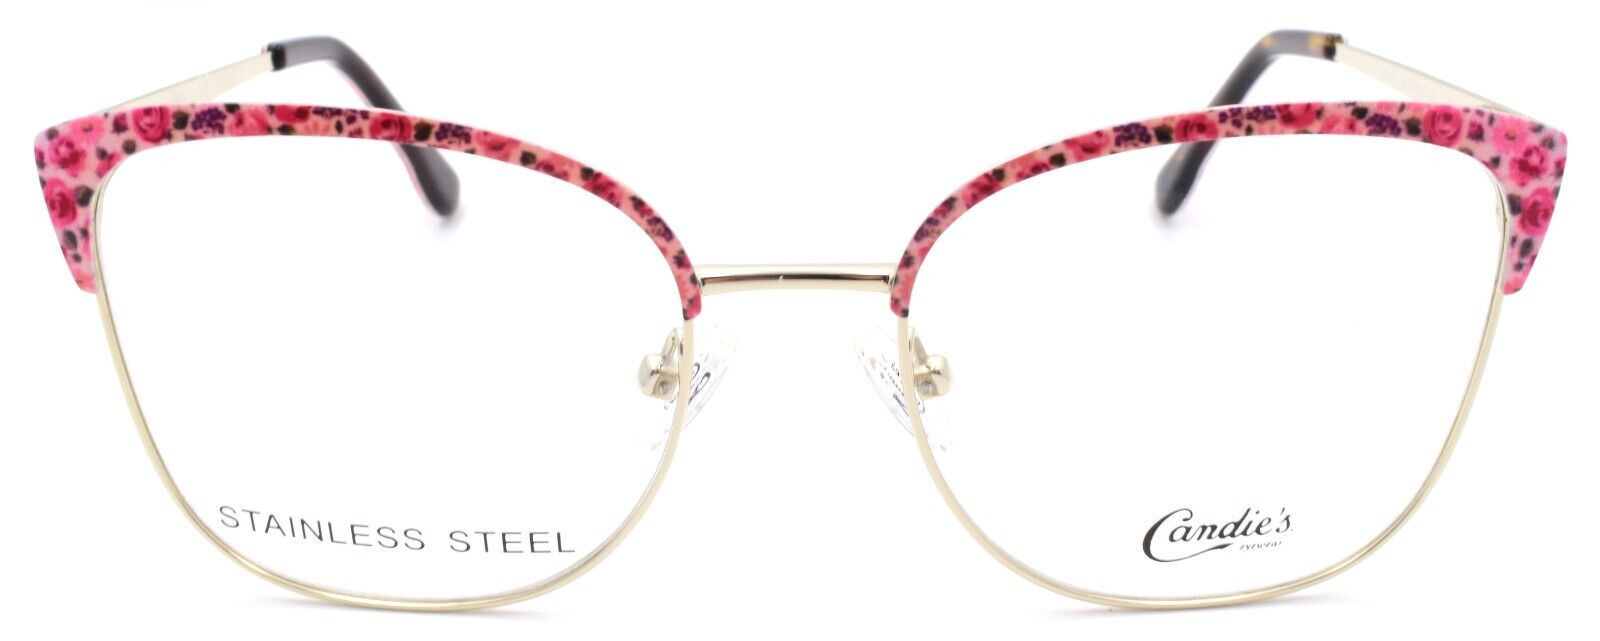 2-Candies CA0171 074 Women's Eyeglasses Frames 49-17-140 Pink / Silver-889214071460-IKSpecs